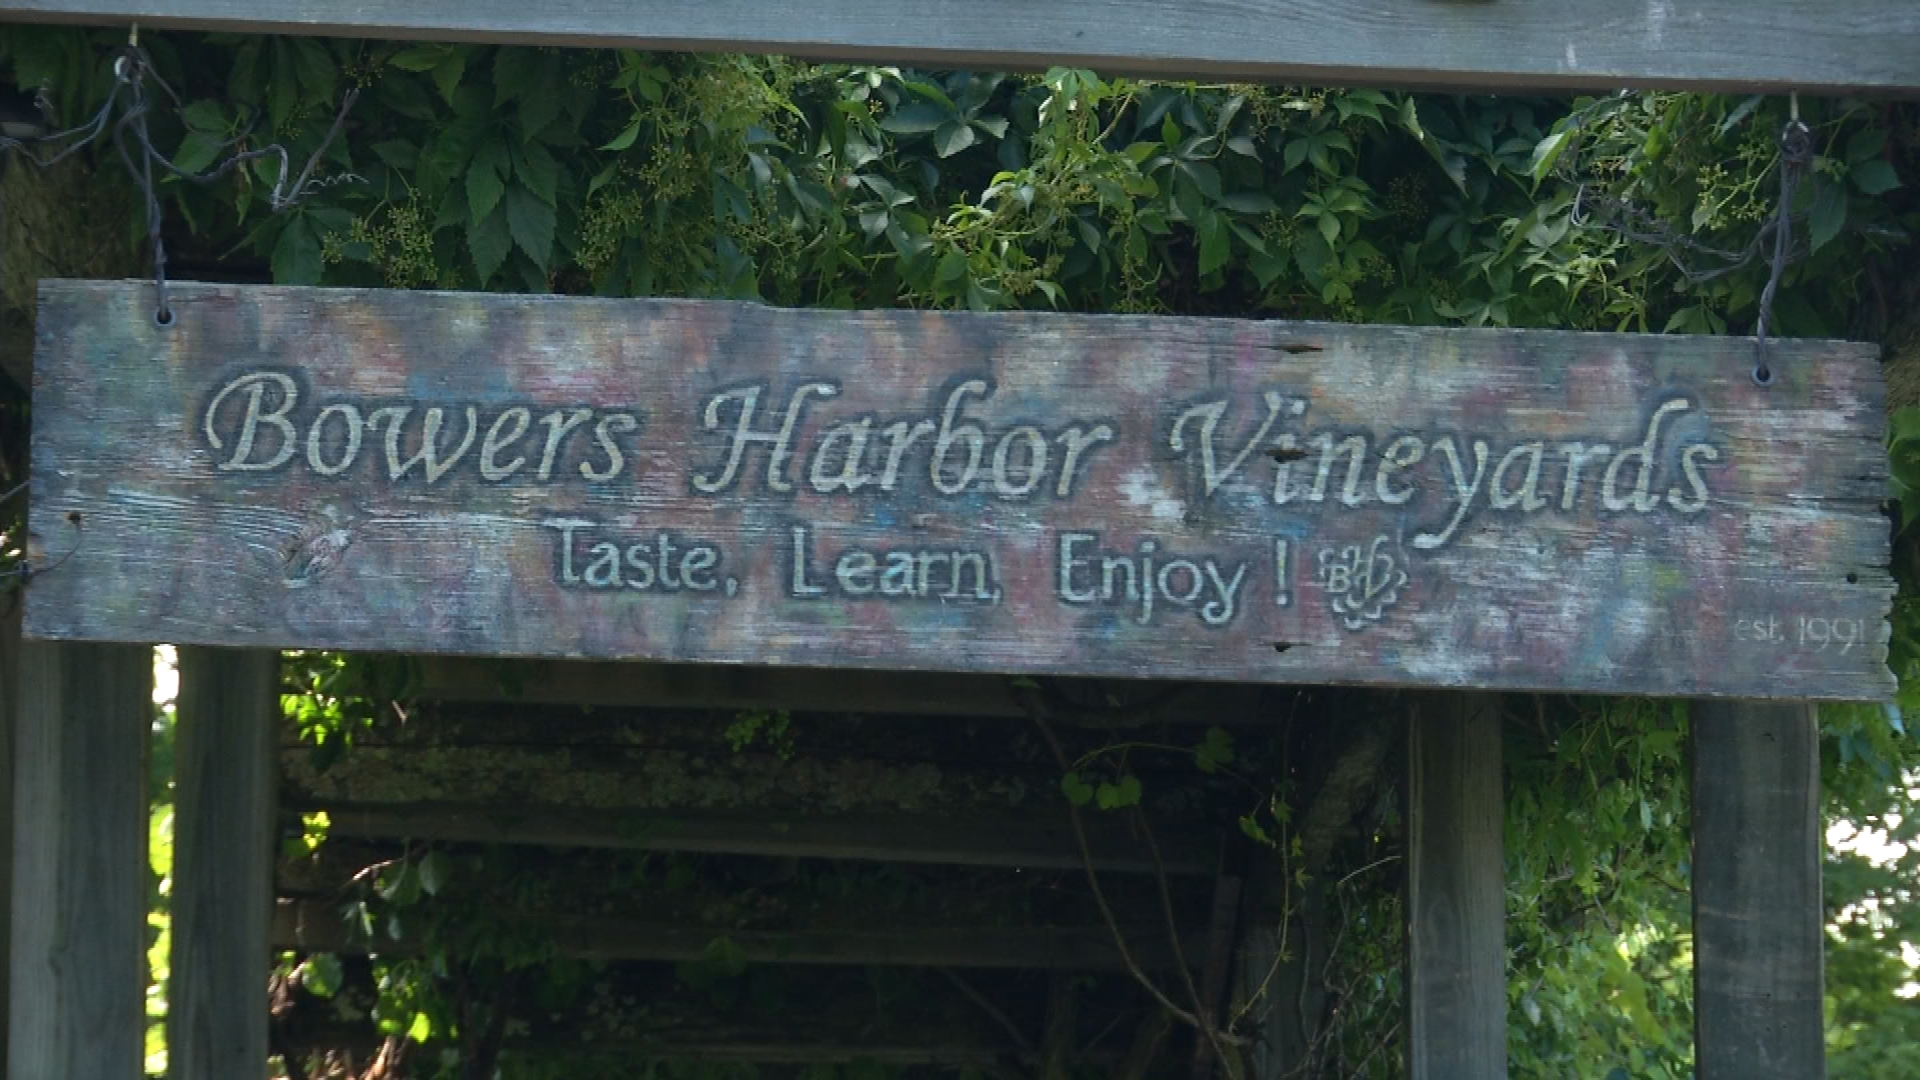 Bowers Harbor Vineyards 2